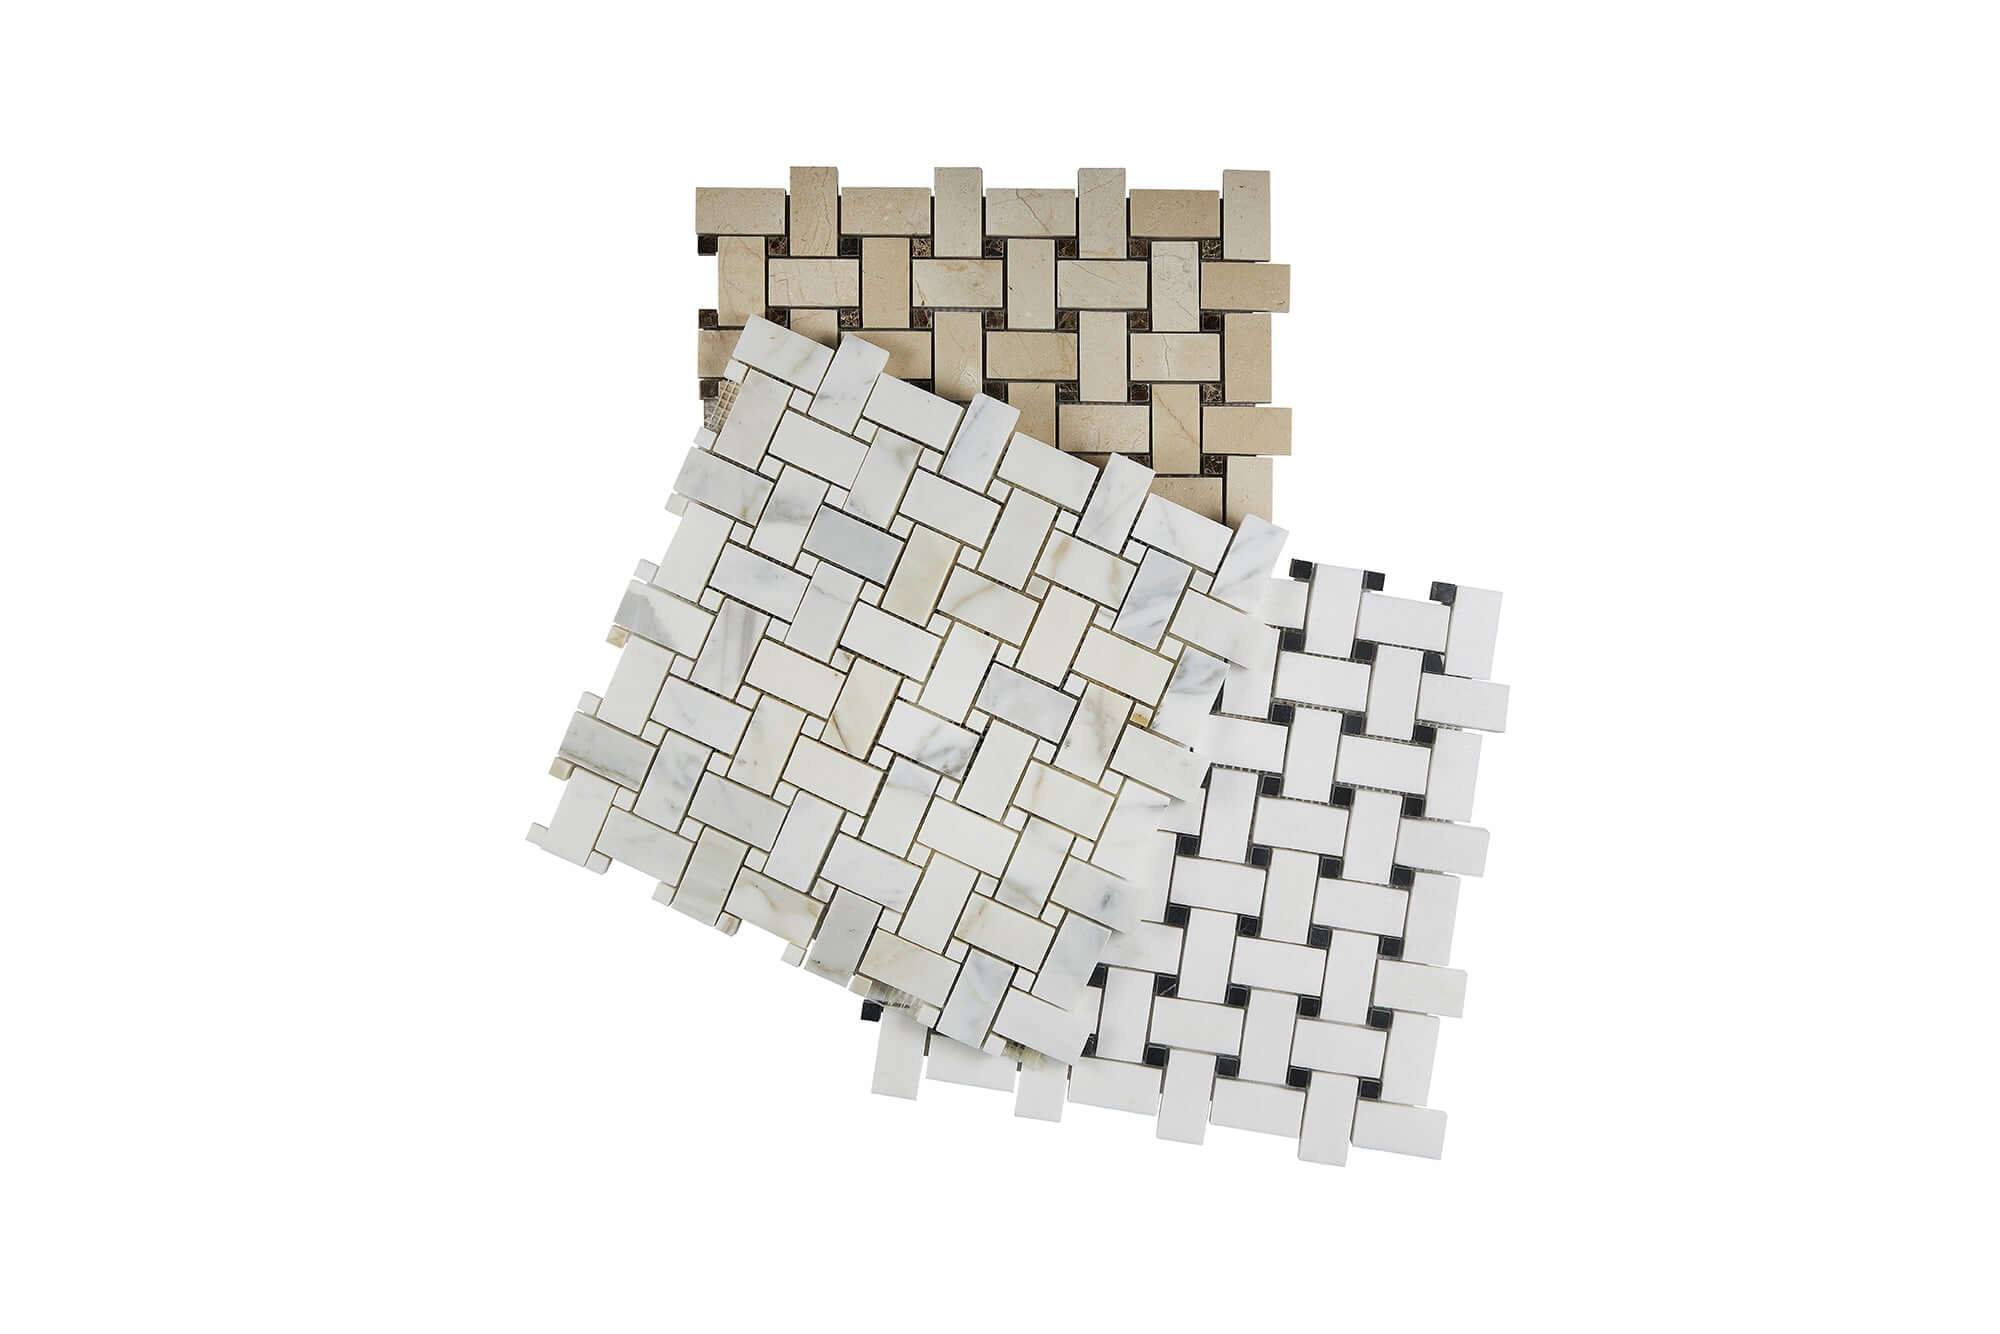 basketweave shape natural stone mosaic tile